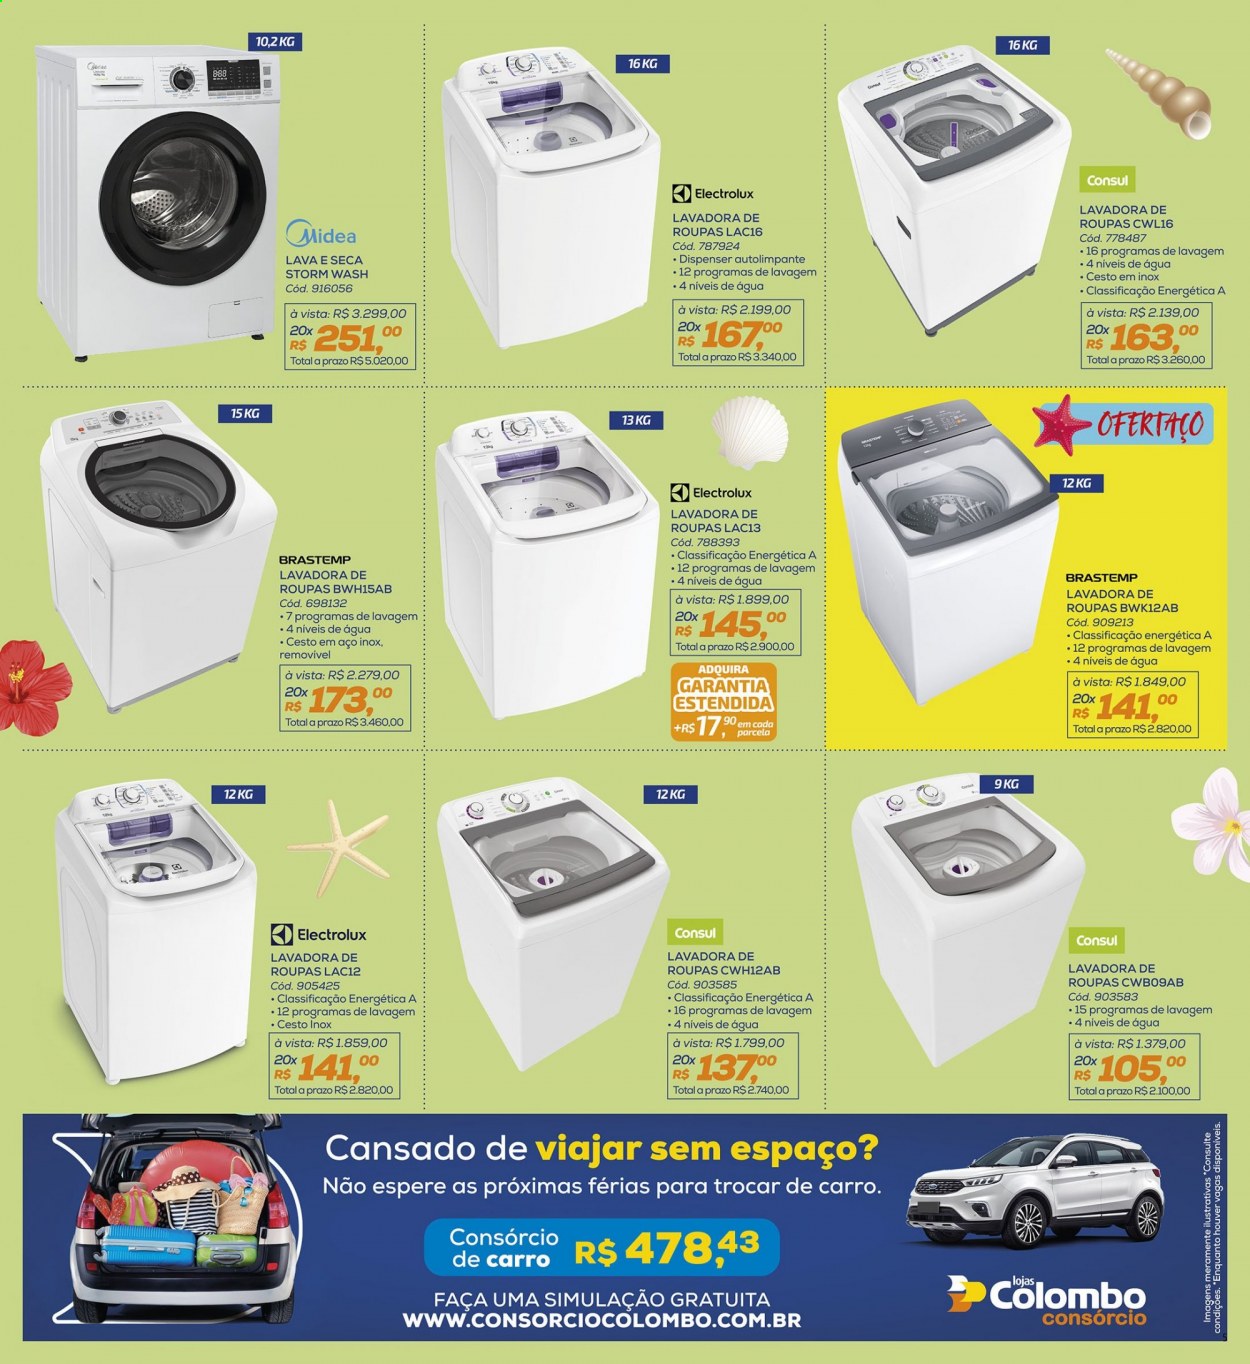 thumbnail - Folheto Lojas Colombo - 01/01/2021 - 31/01/2021 - Produtos em promoção - Midea, Brastemp, Electrolux, cesta, máquina de lavar roupa. Página 5.